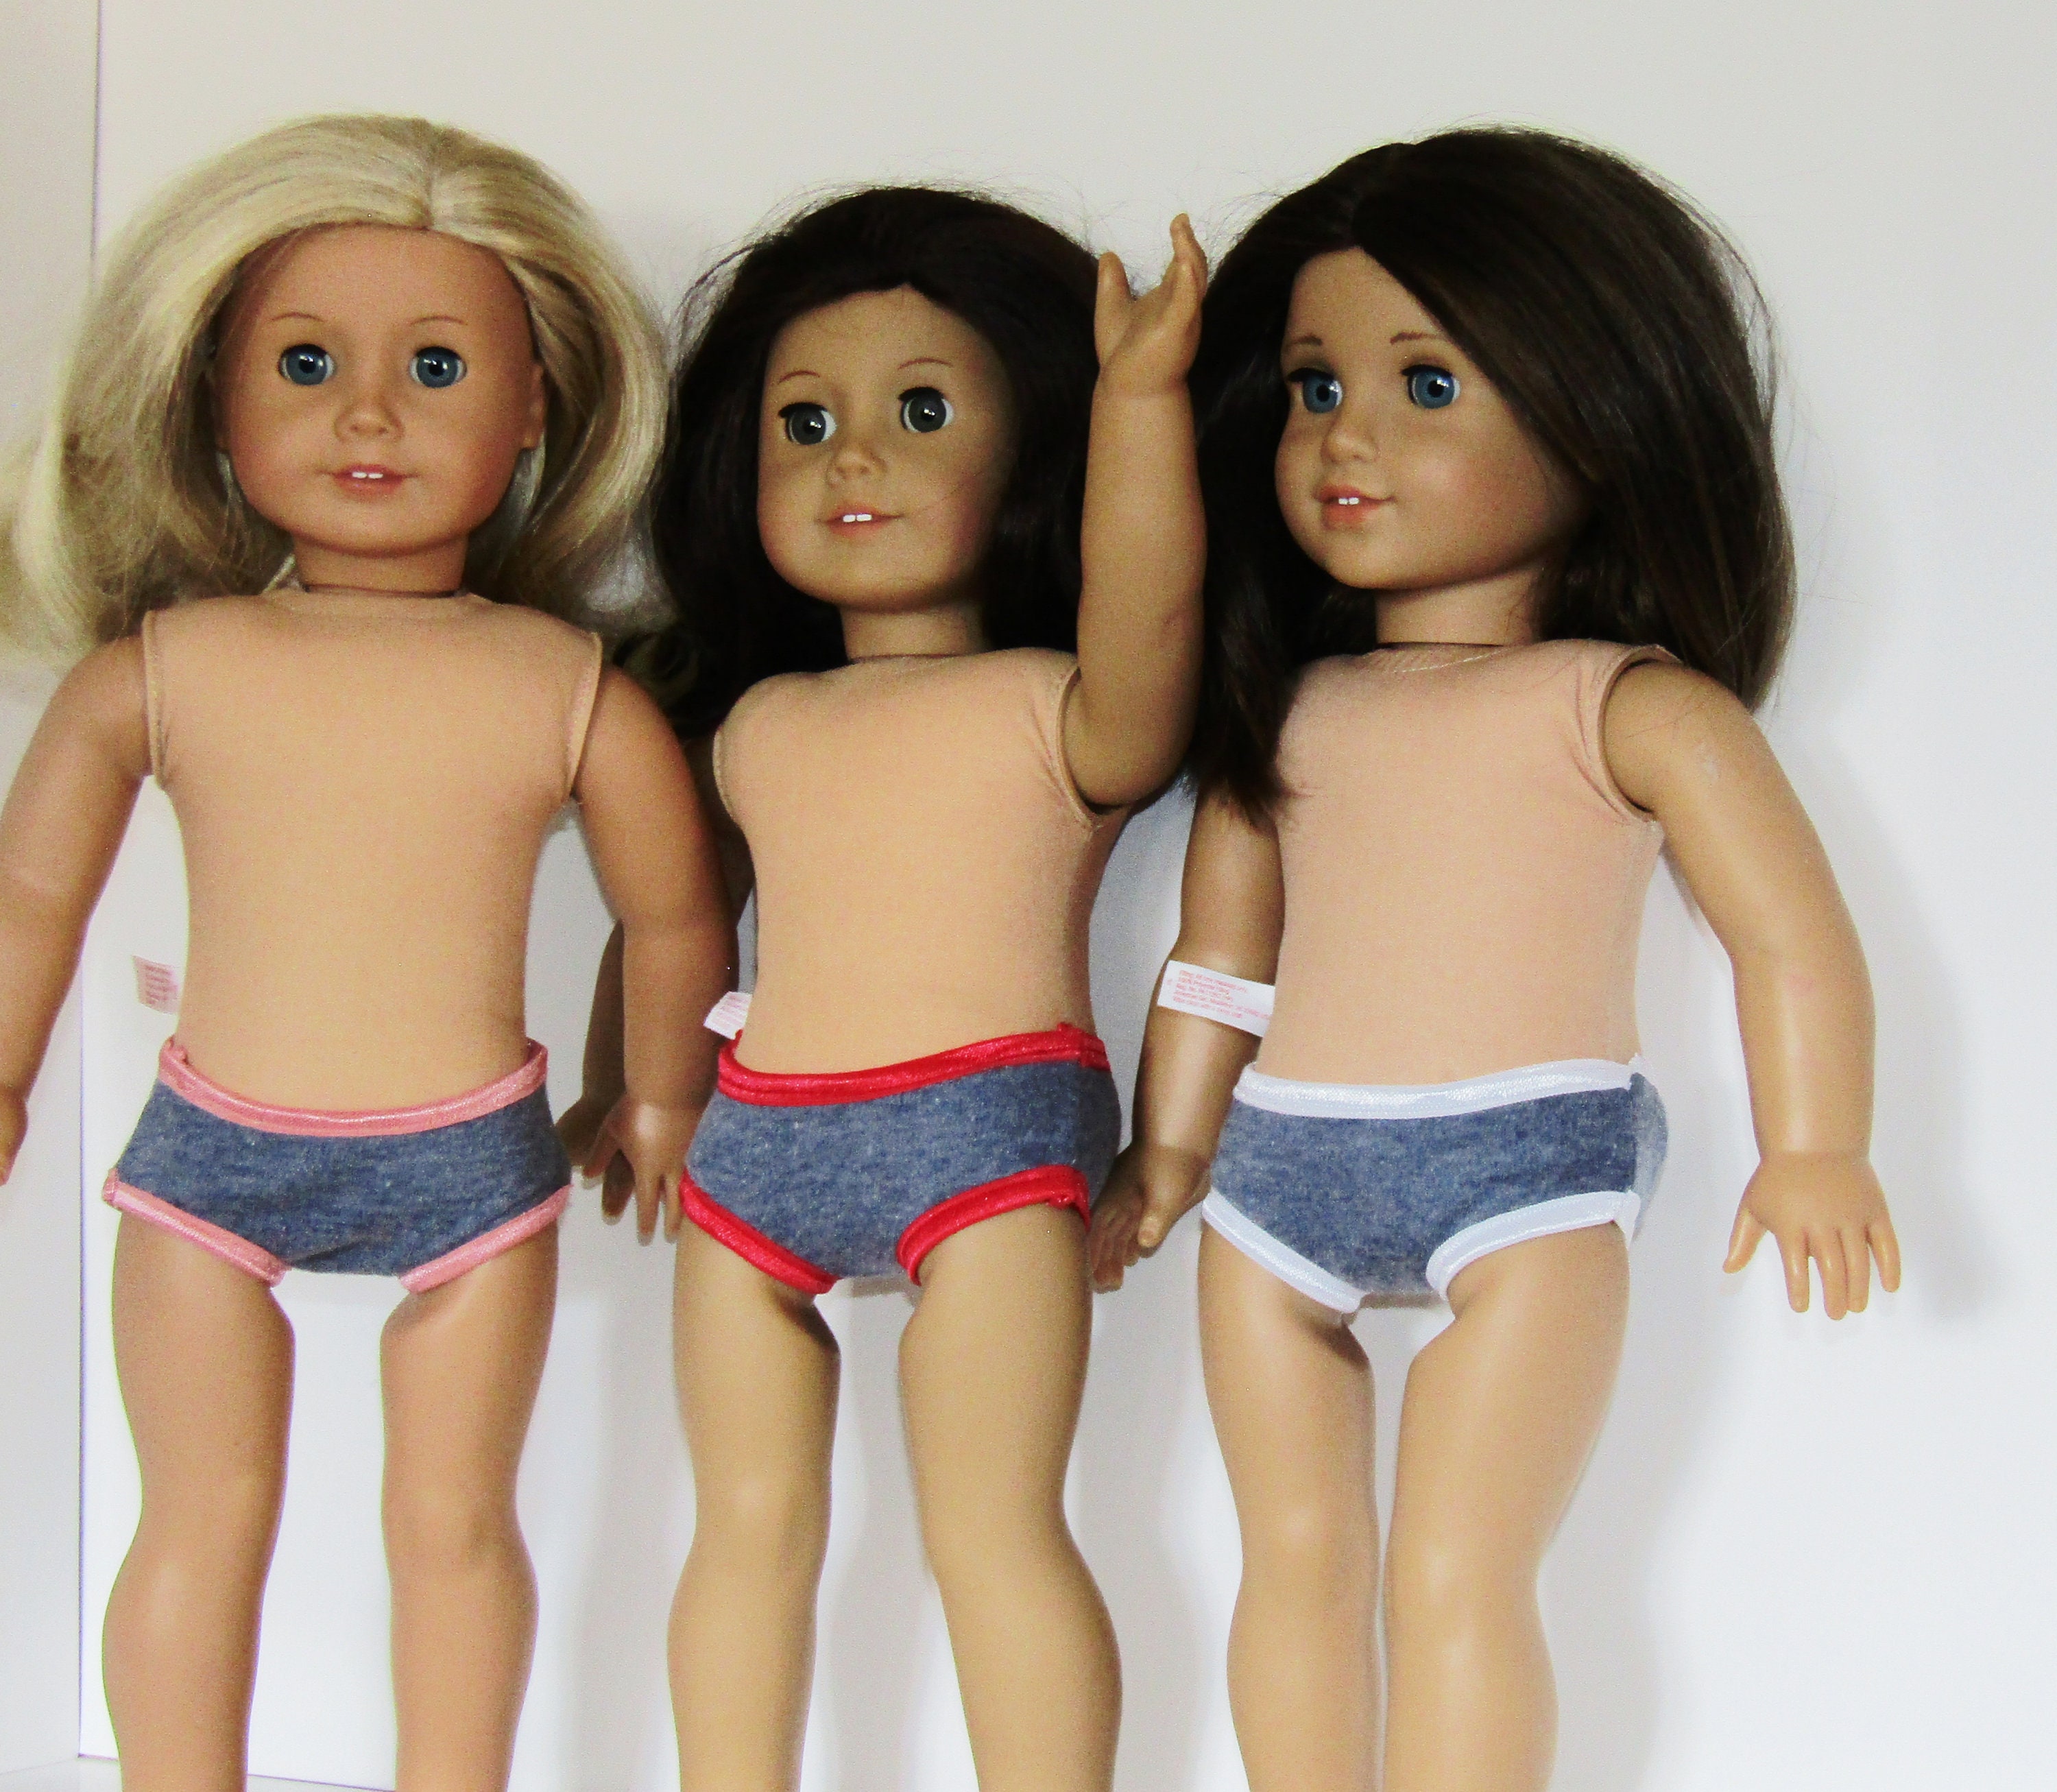 Panties Underpants Underwear for American Girl Doll Set of 3 18